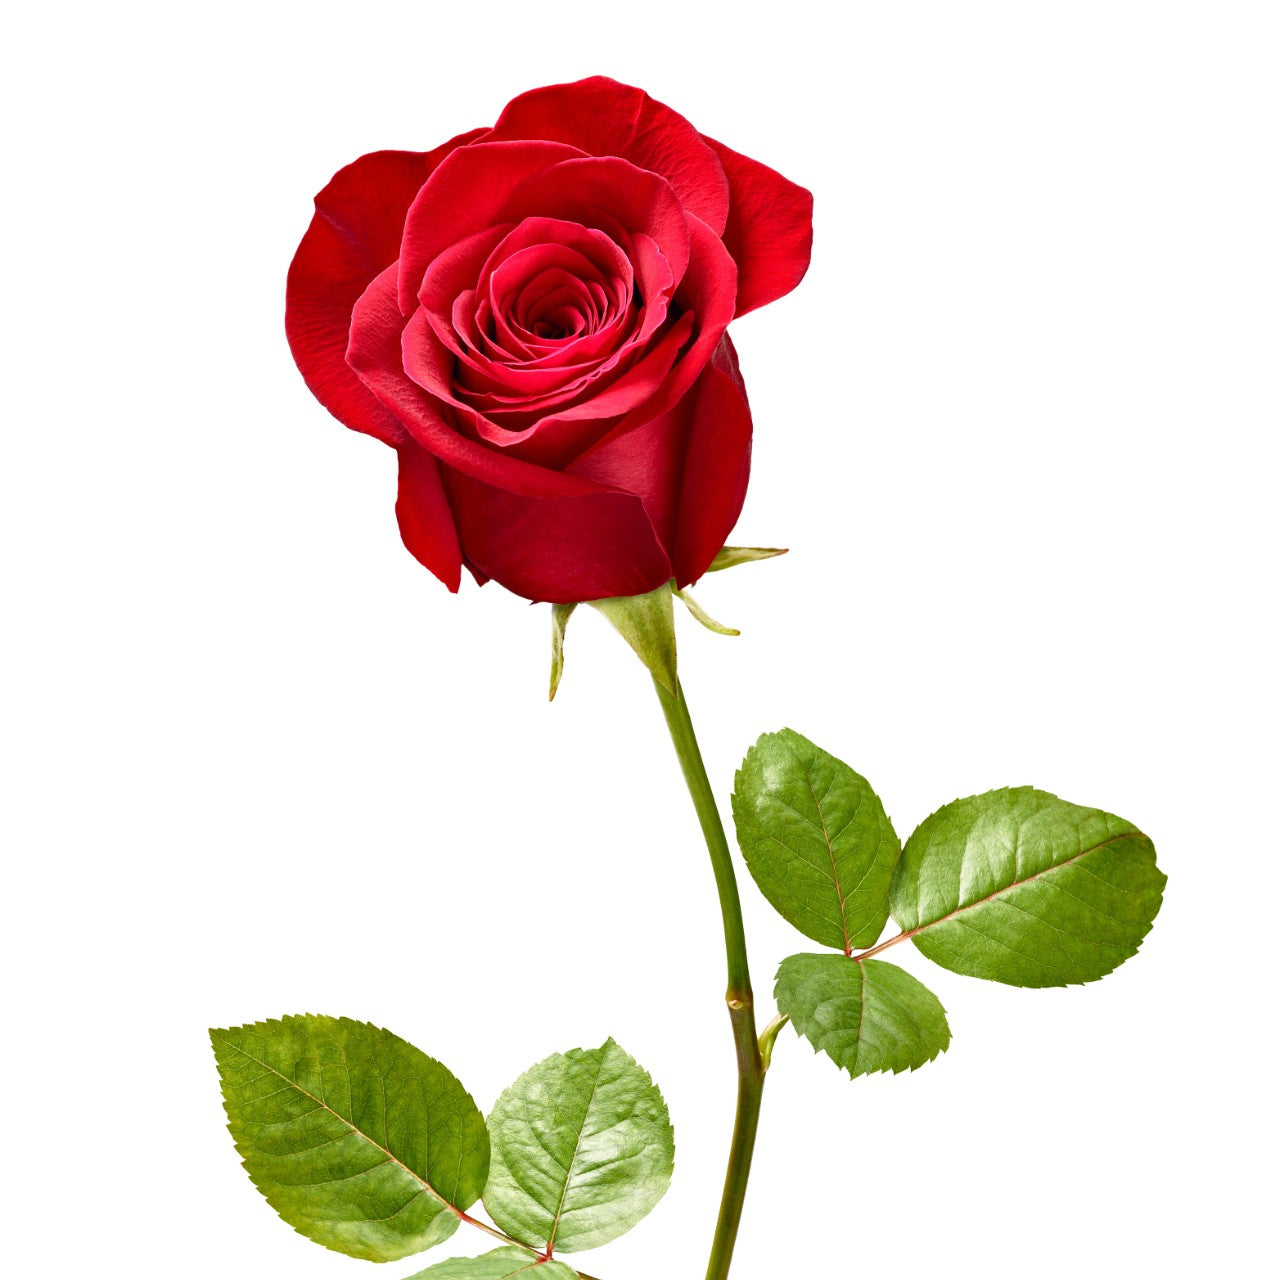 Betinget Credential Sprængstoffer Kappa Delta Rho - Red Roses - Bulk – Flowers For Fundraising